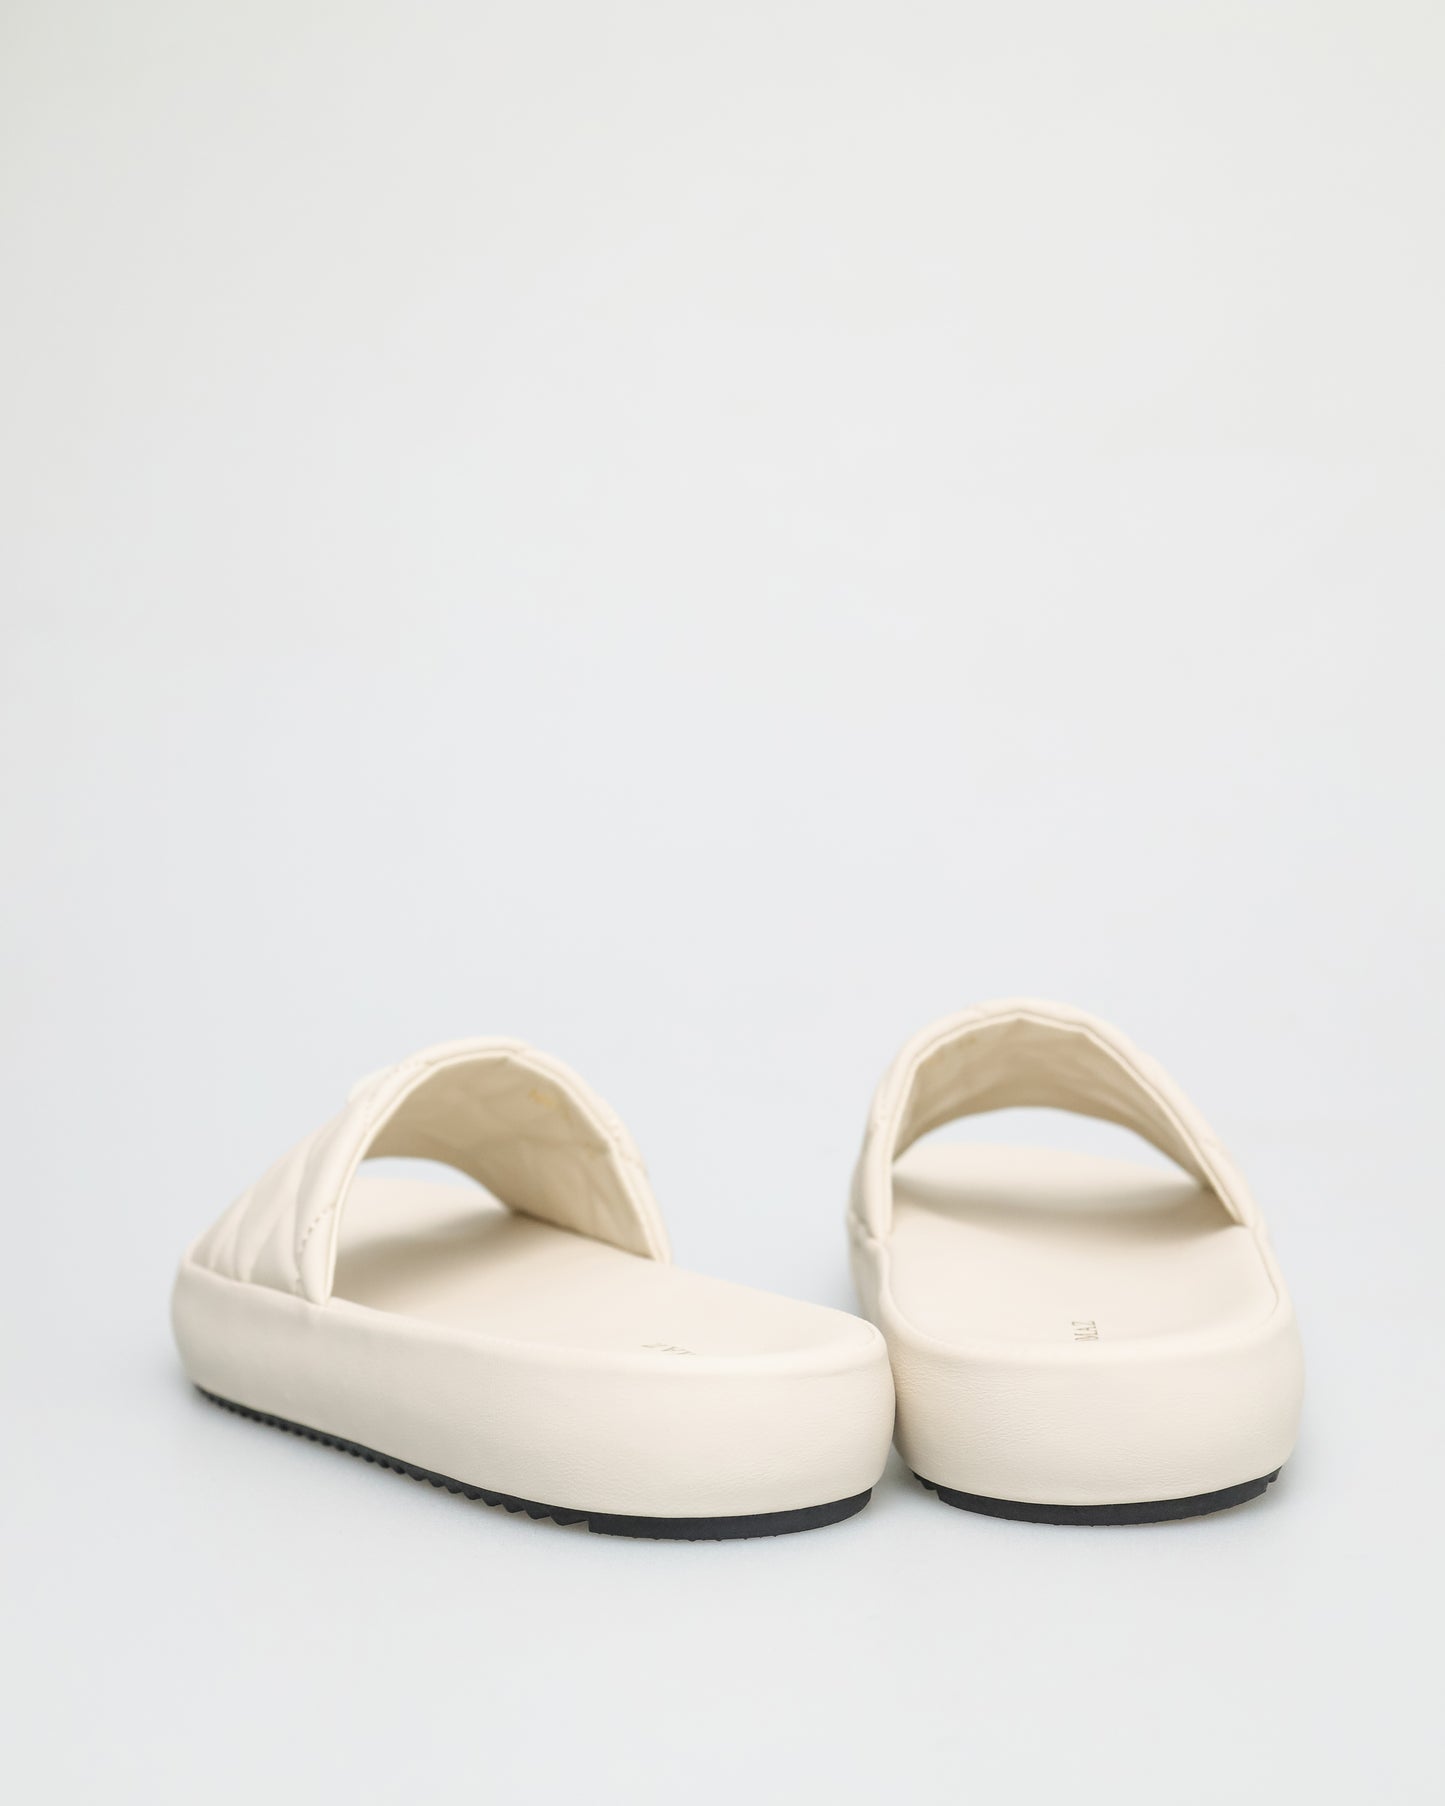 Tomaz NN190 Ladies Quilted Emblem Sandals (Cream)